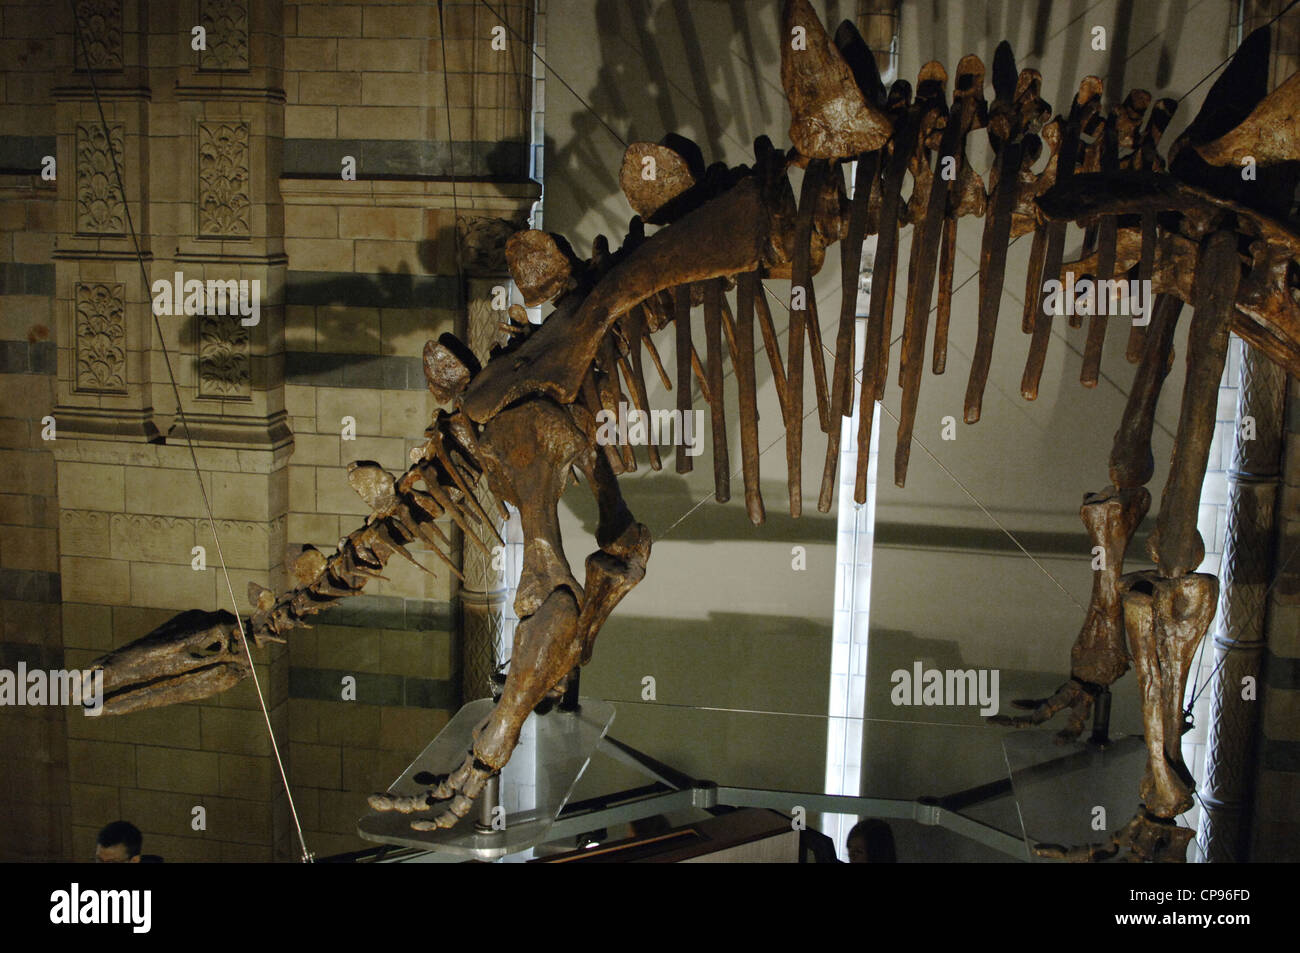 Tuojiangosaurus multispinus skeleton. Late Jurassic Period. Oxfordian Kimmeridgian stage. Stock Photo